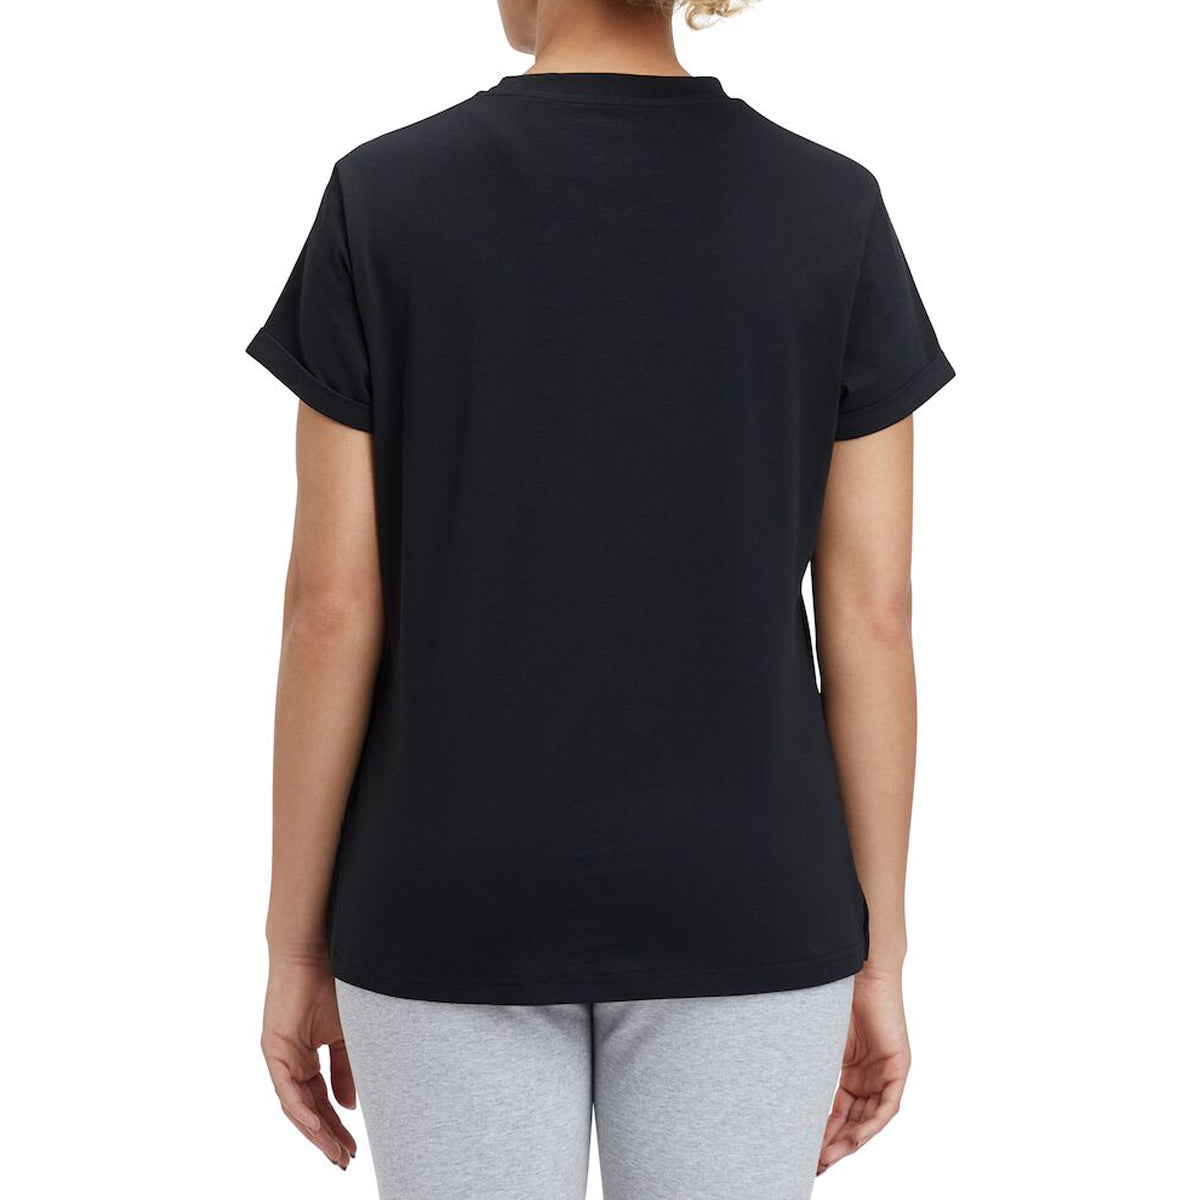 Energetics Java Lifestyle T-Shirt For Women, Black